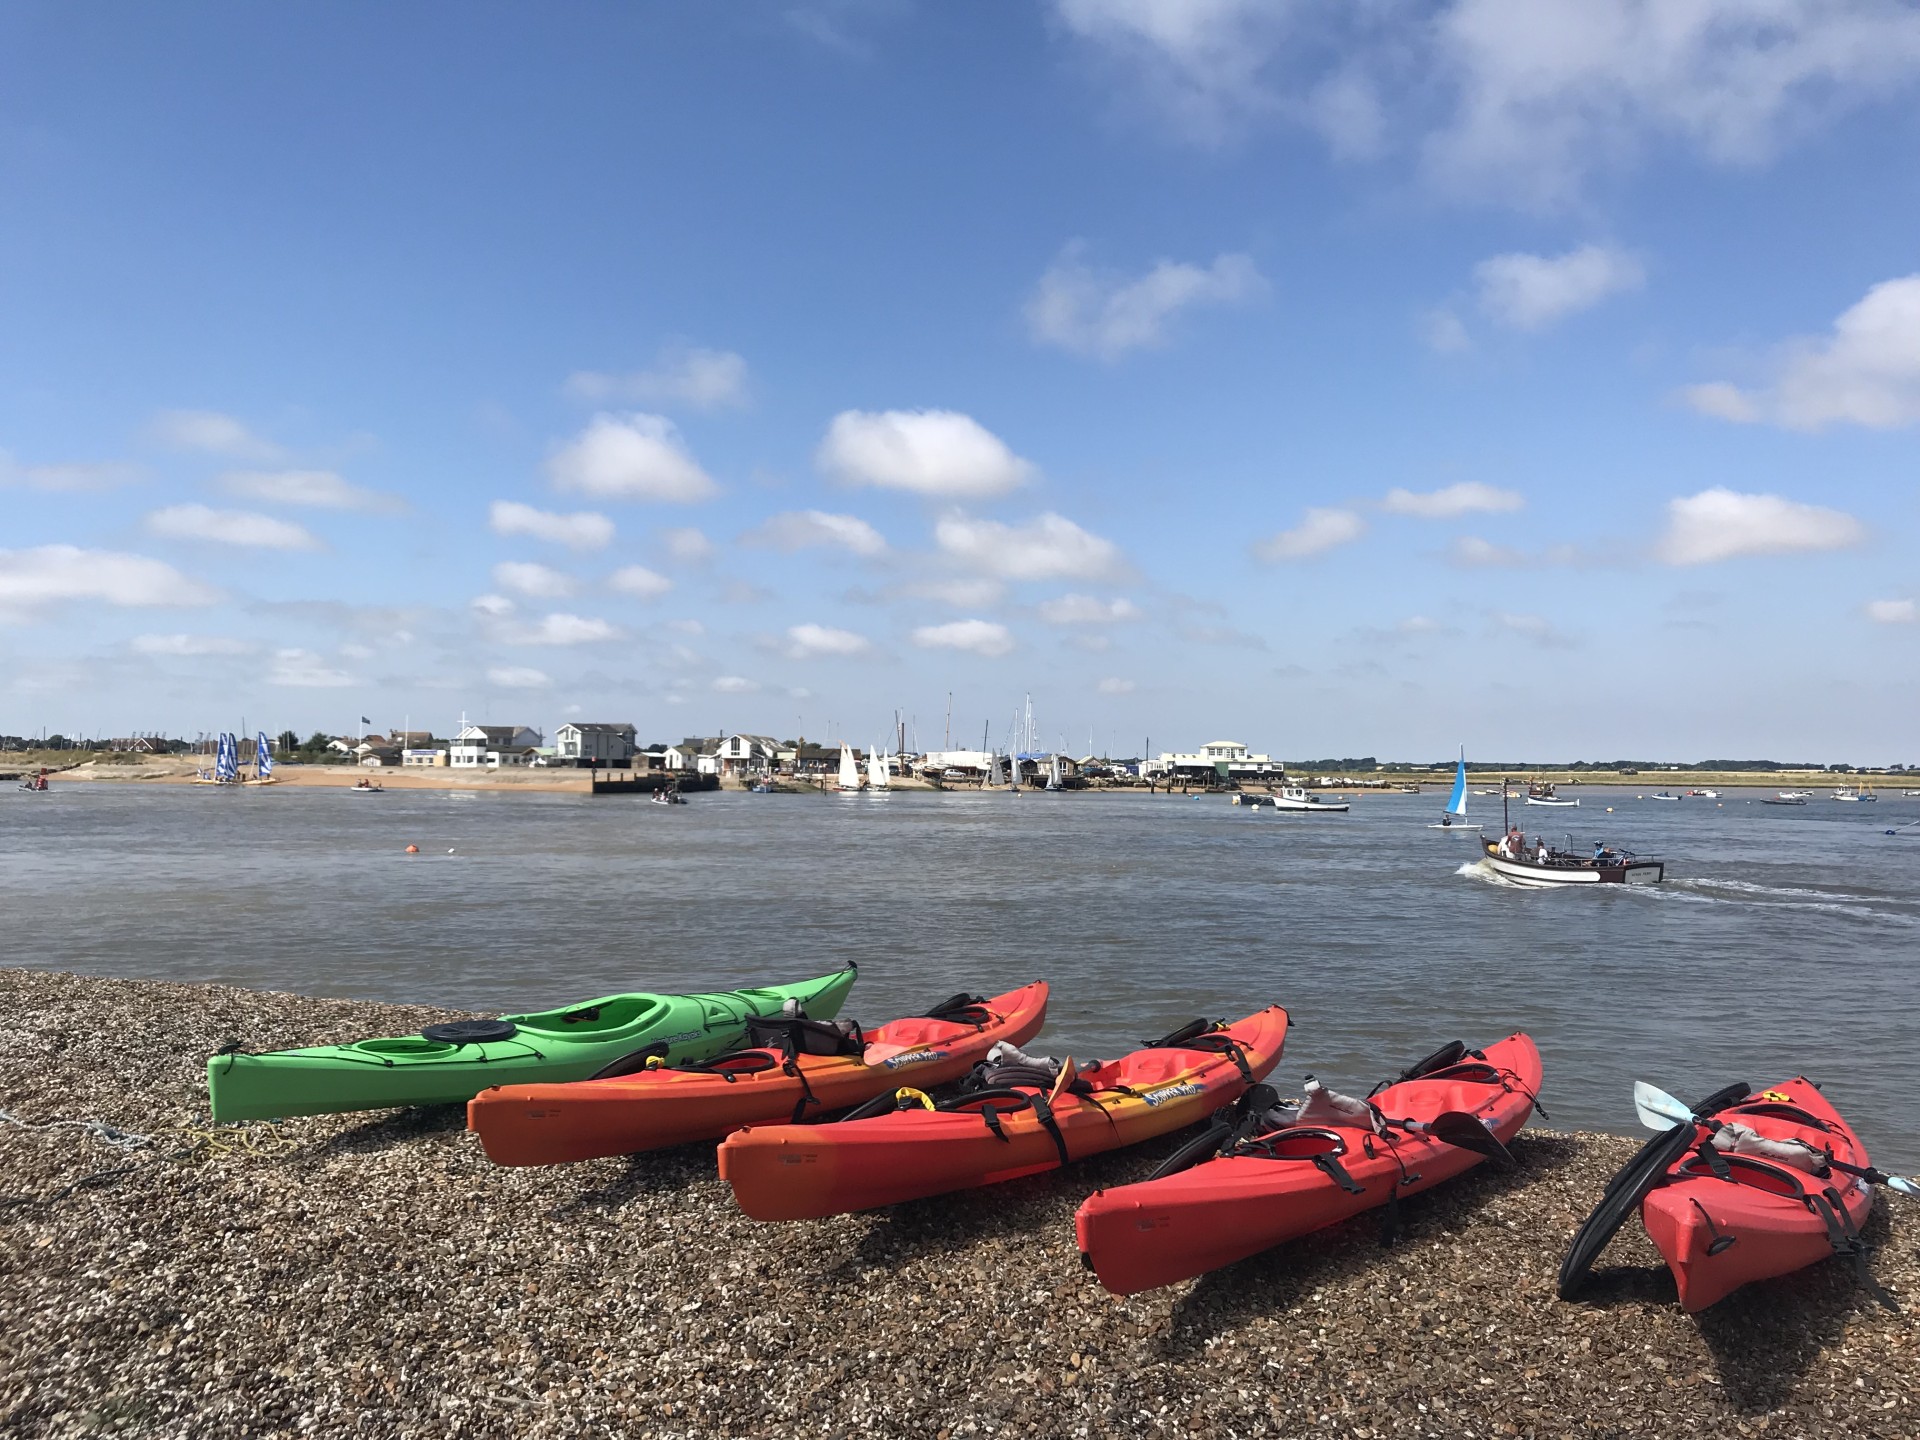 Kayaks ready to launch off a shingle beach in Suffolk.